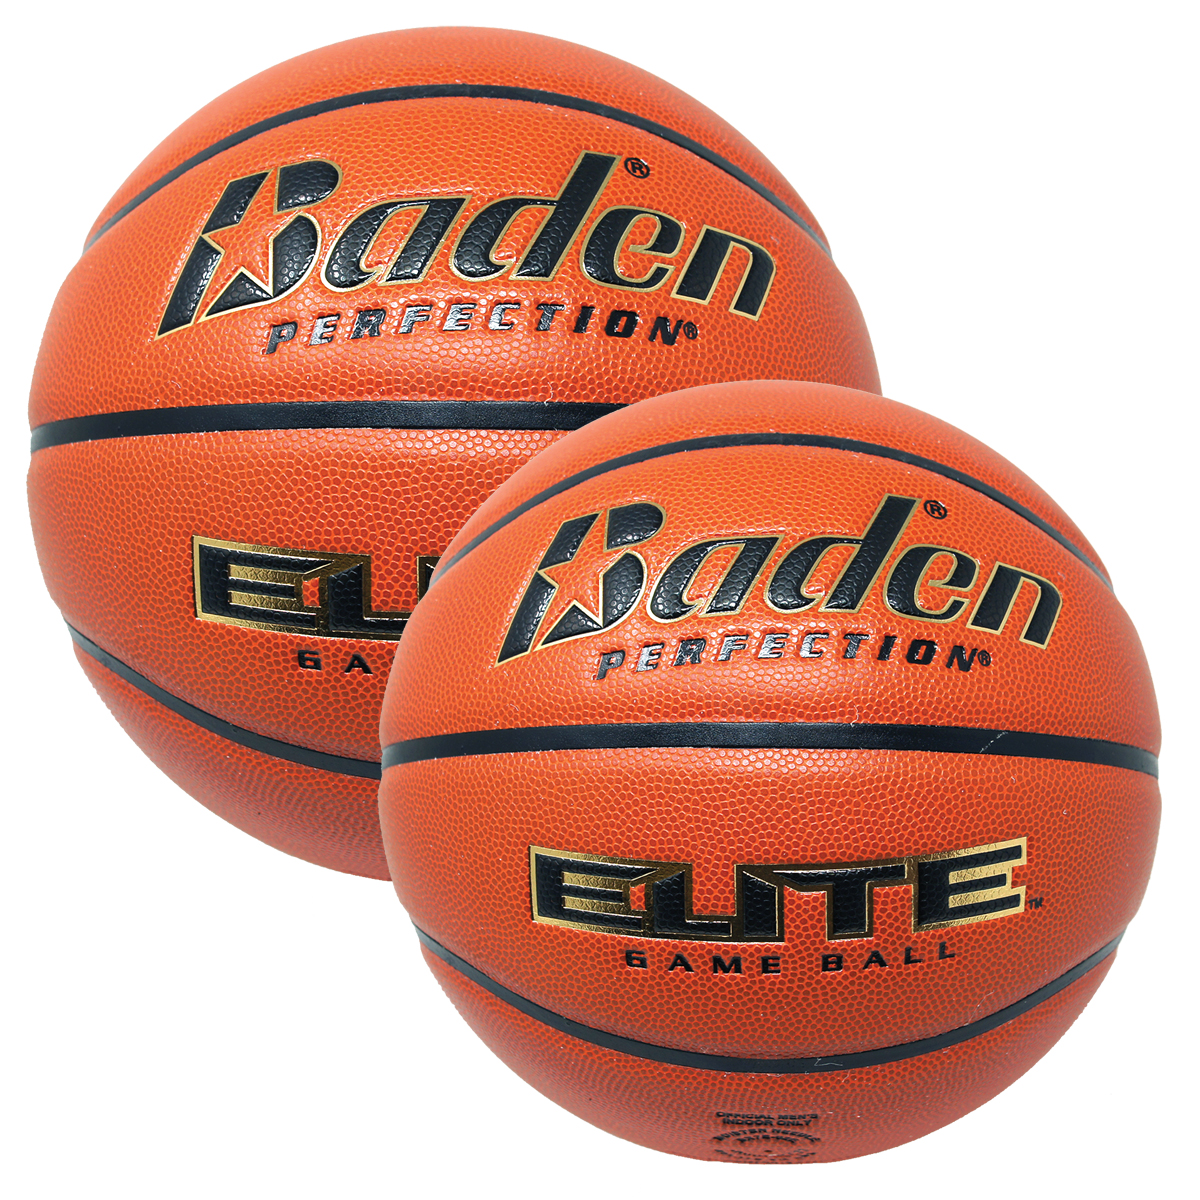 Baden Perfection Elite Basketballs